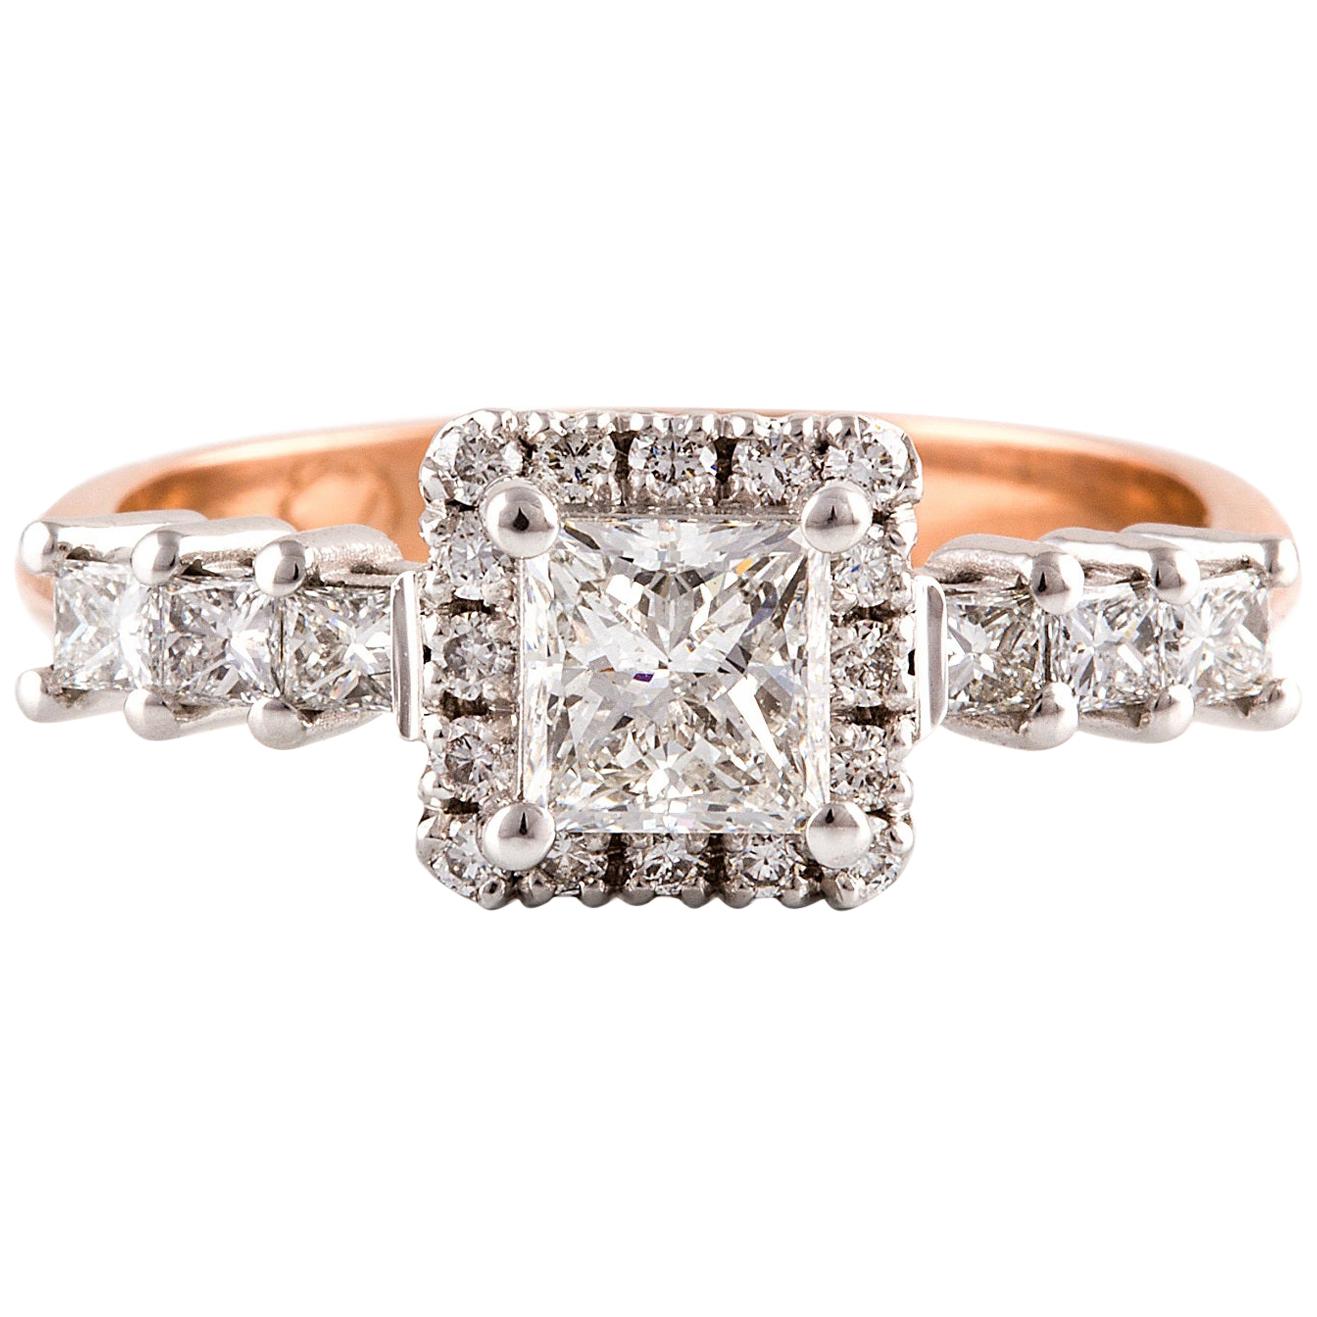 0.72 Carat Princess Cut Diamond Engagement Ring in 18 Carat Gold By Kian Design For Sale